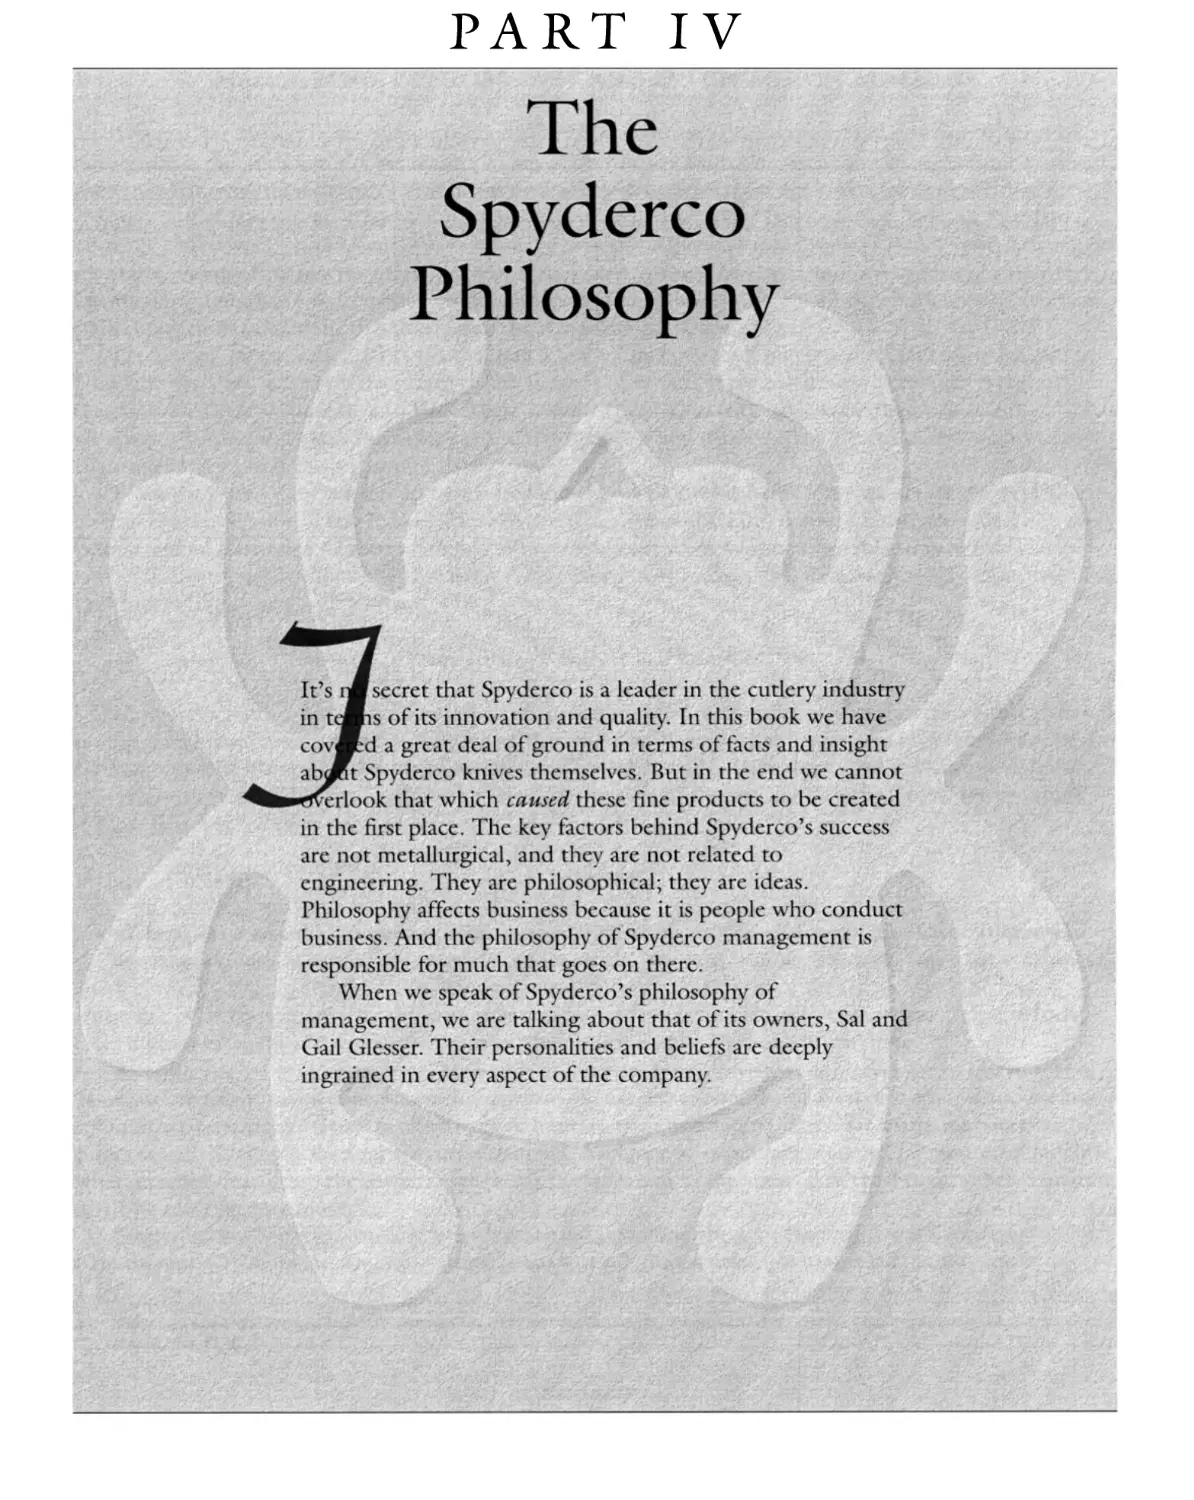 PART IV: THE SPYDERCO PHILOSOPHY